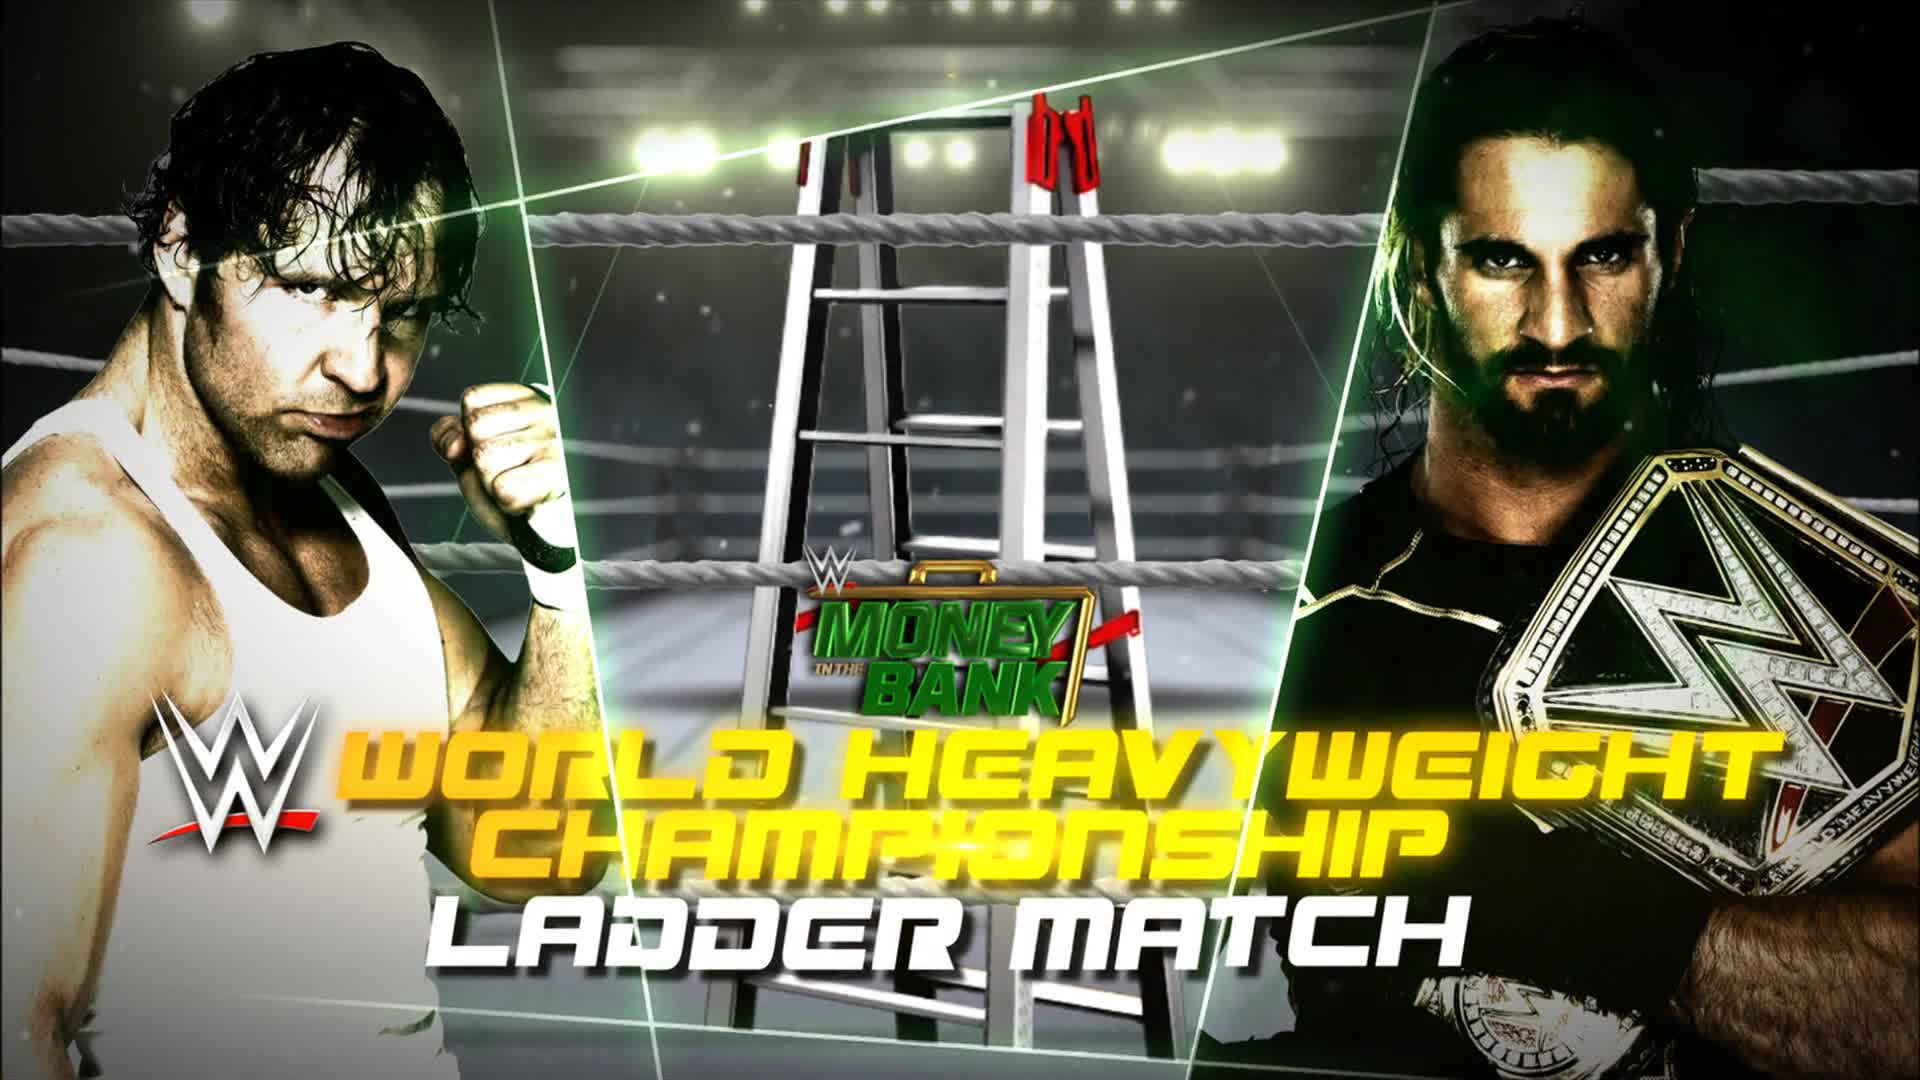 Dean Ambrose vs Seth Rollins, WWE World Heavyweight Championship